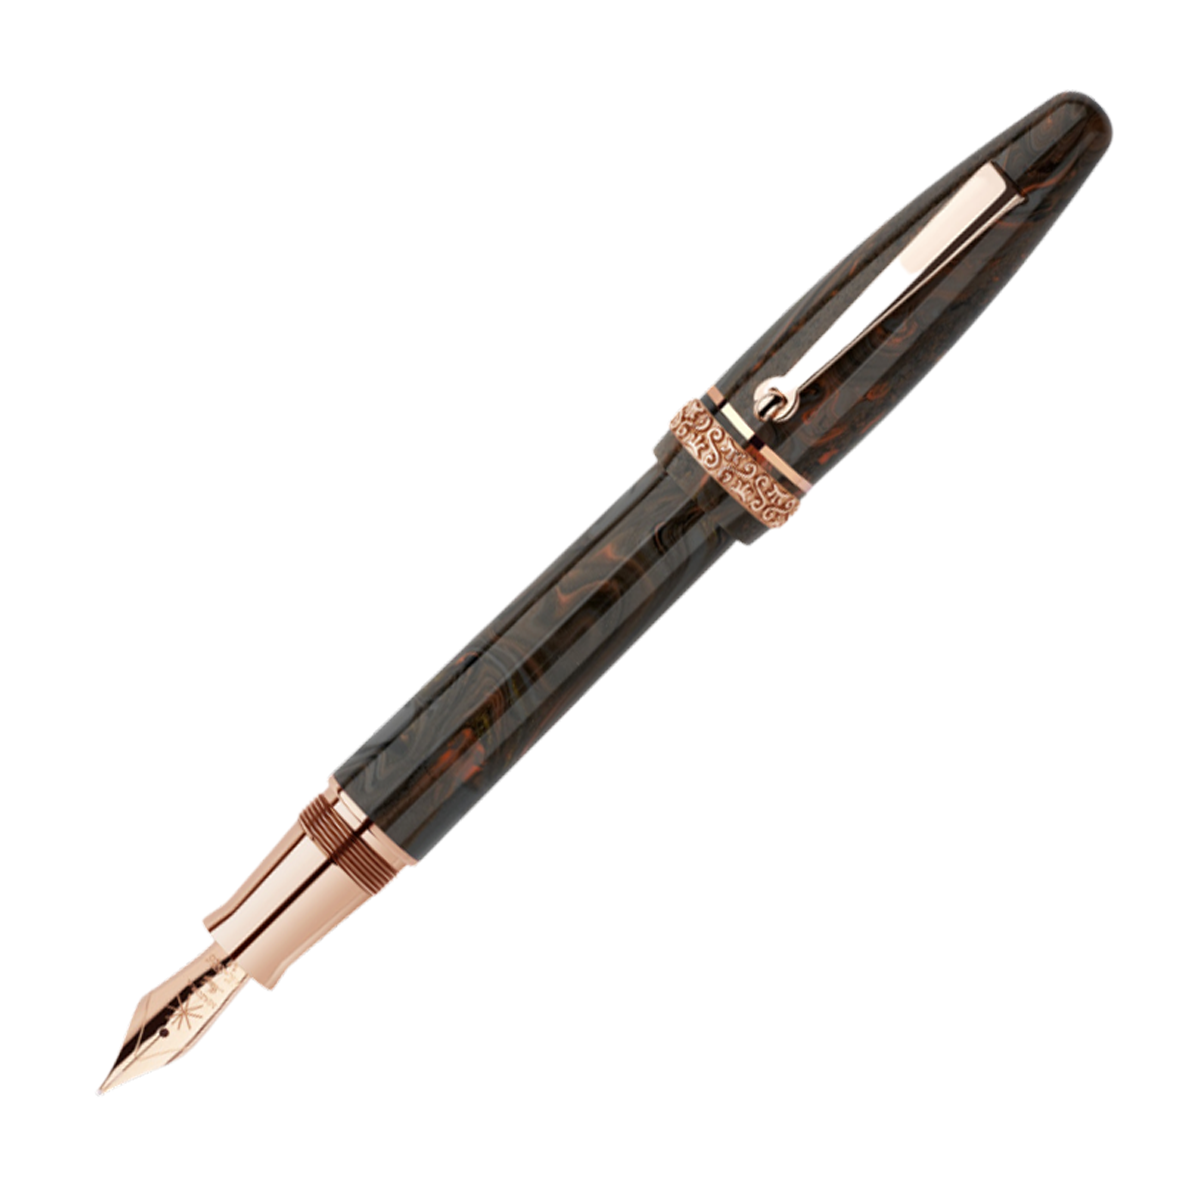 Maiora Ogiva Golden Age Brown/Orange w/Rosegold Trim (Earth) - Fountain Pen (Cartridge/Convertor)